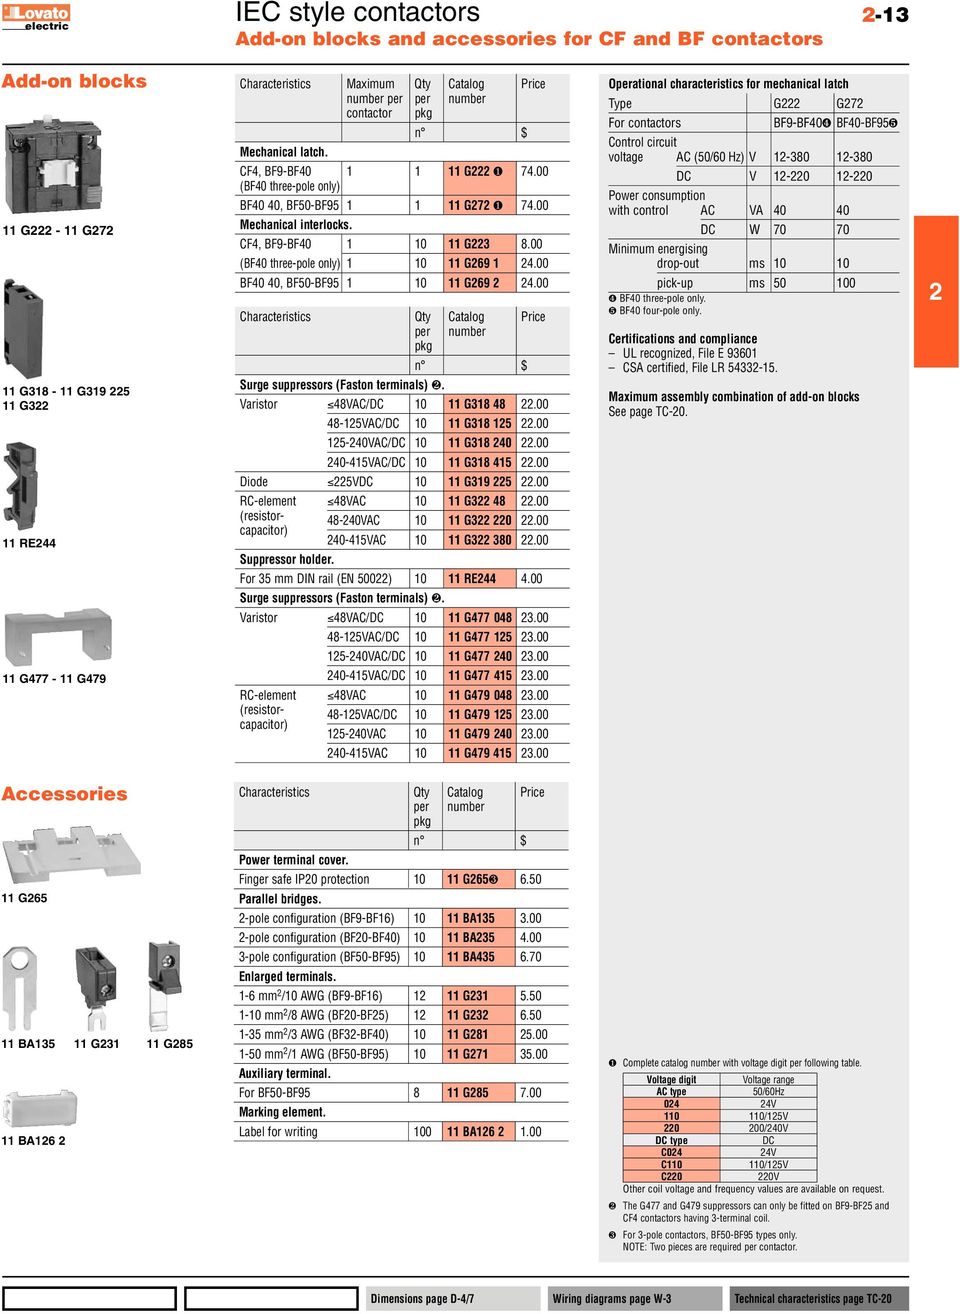 00 Characteristics Qty Catalog Price per number n $ Surge suppressors (Faston terminals) ❷. Varistor 48VAC/DC 0 G38 48.00 48-5VAC/DC 0 G38 5.00 5-40VAC/DC 0 G38 40.00 40-45VAC/DC 0 G38 45.